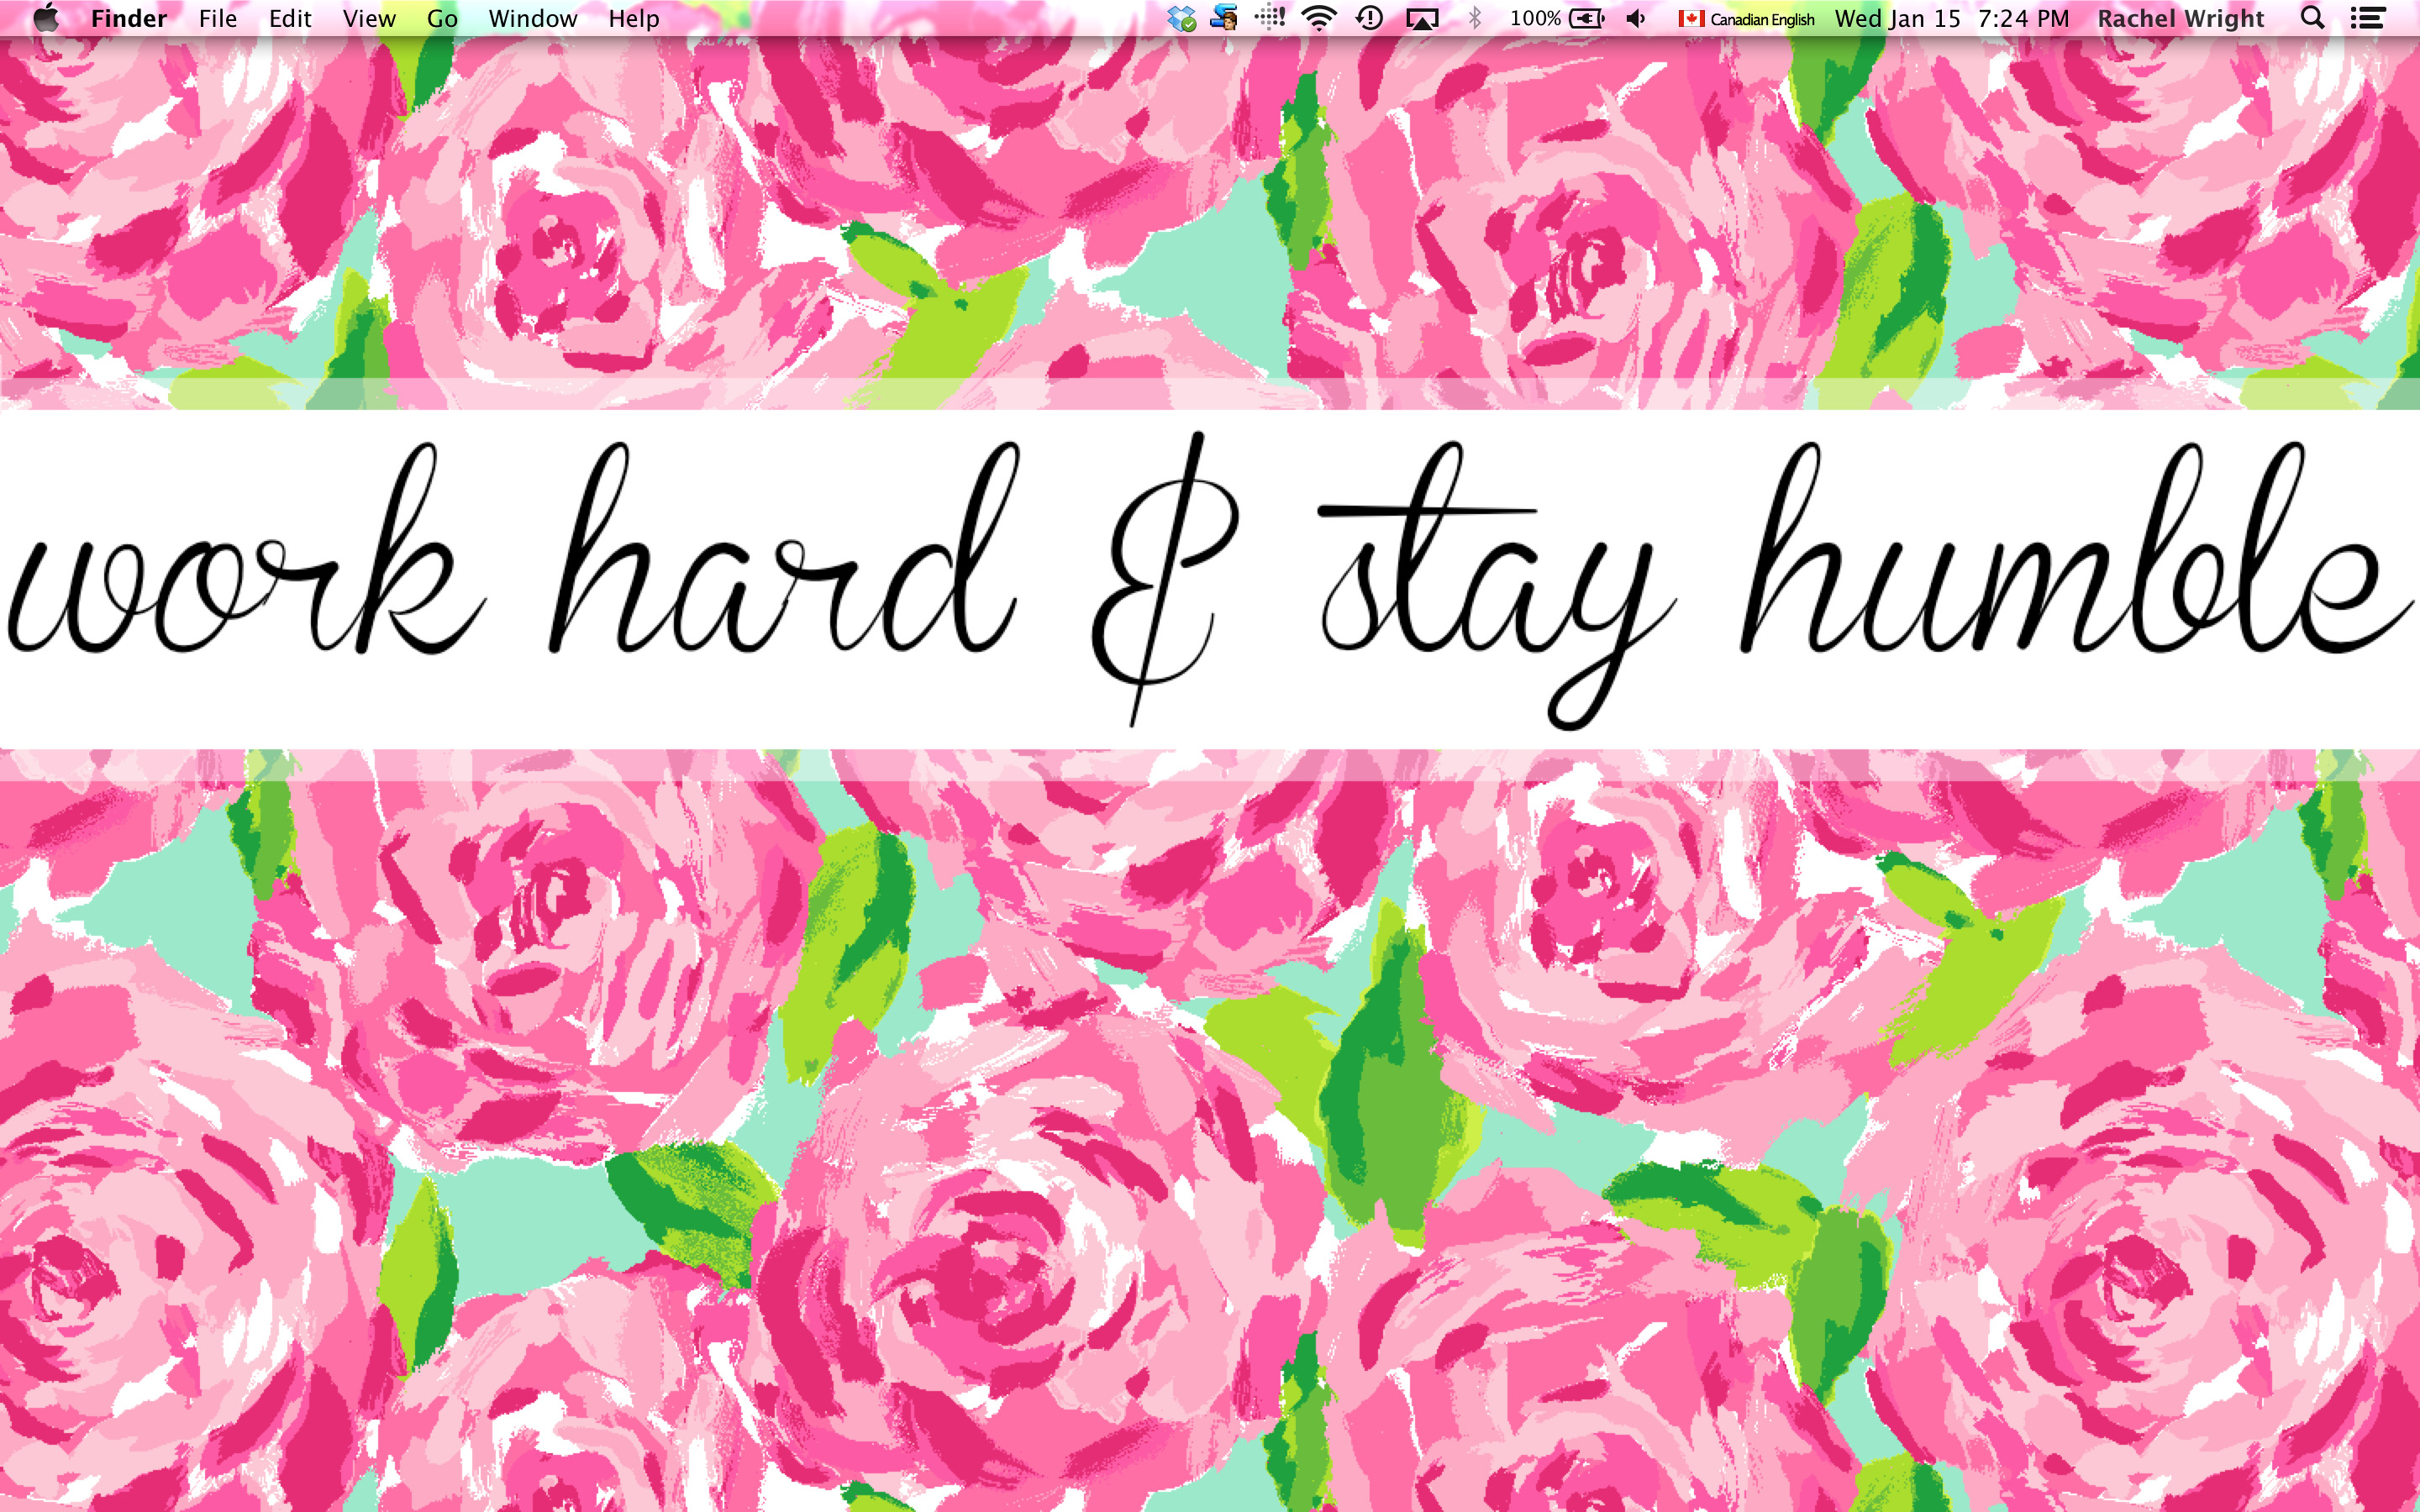 A cute simple lilly pulitzer desktop wallpaper on my macbook pro